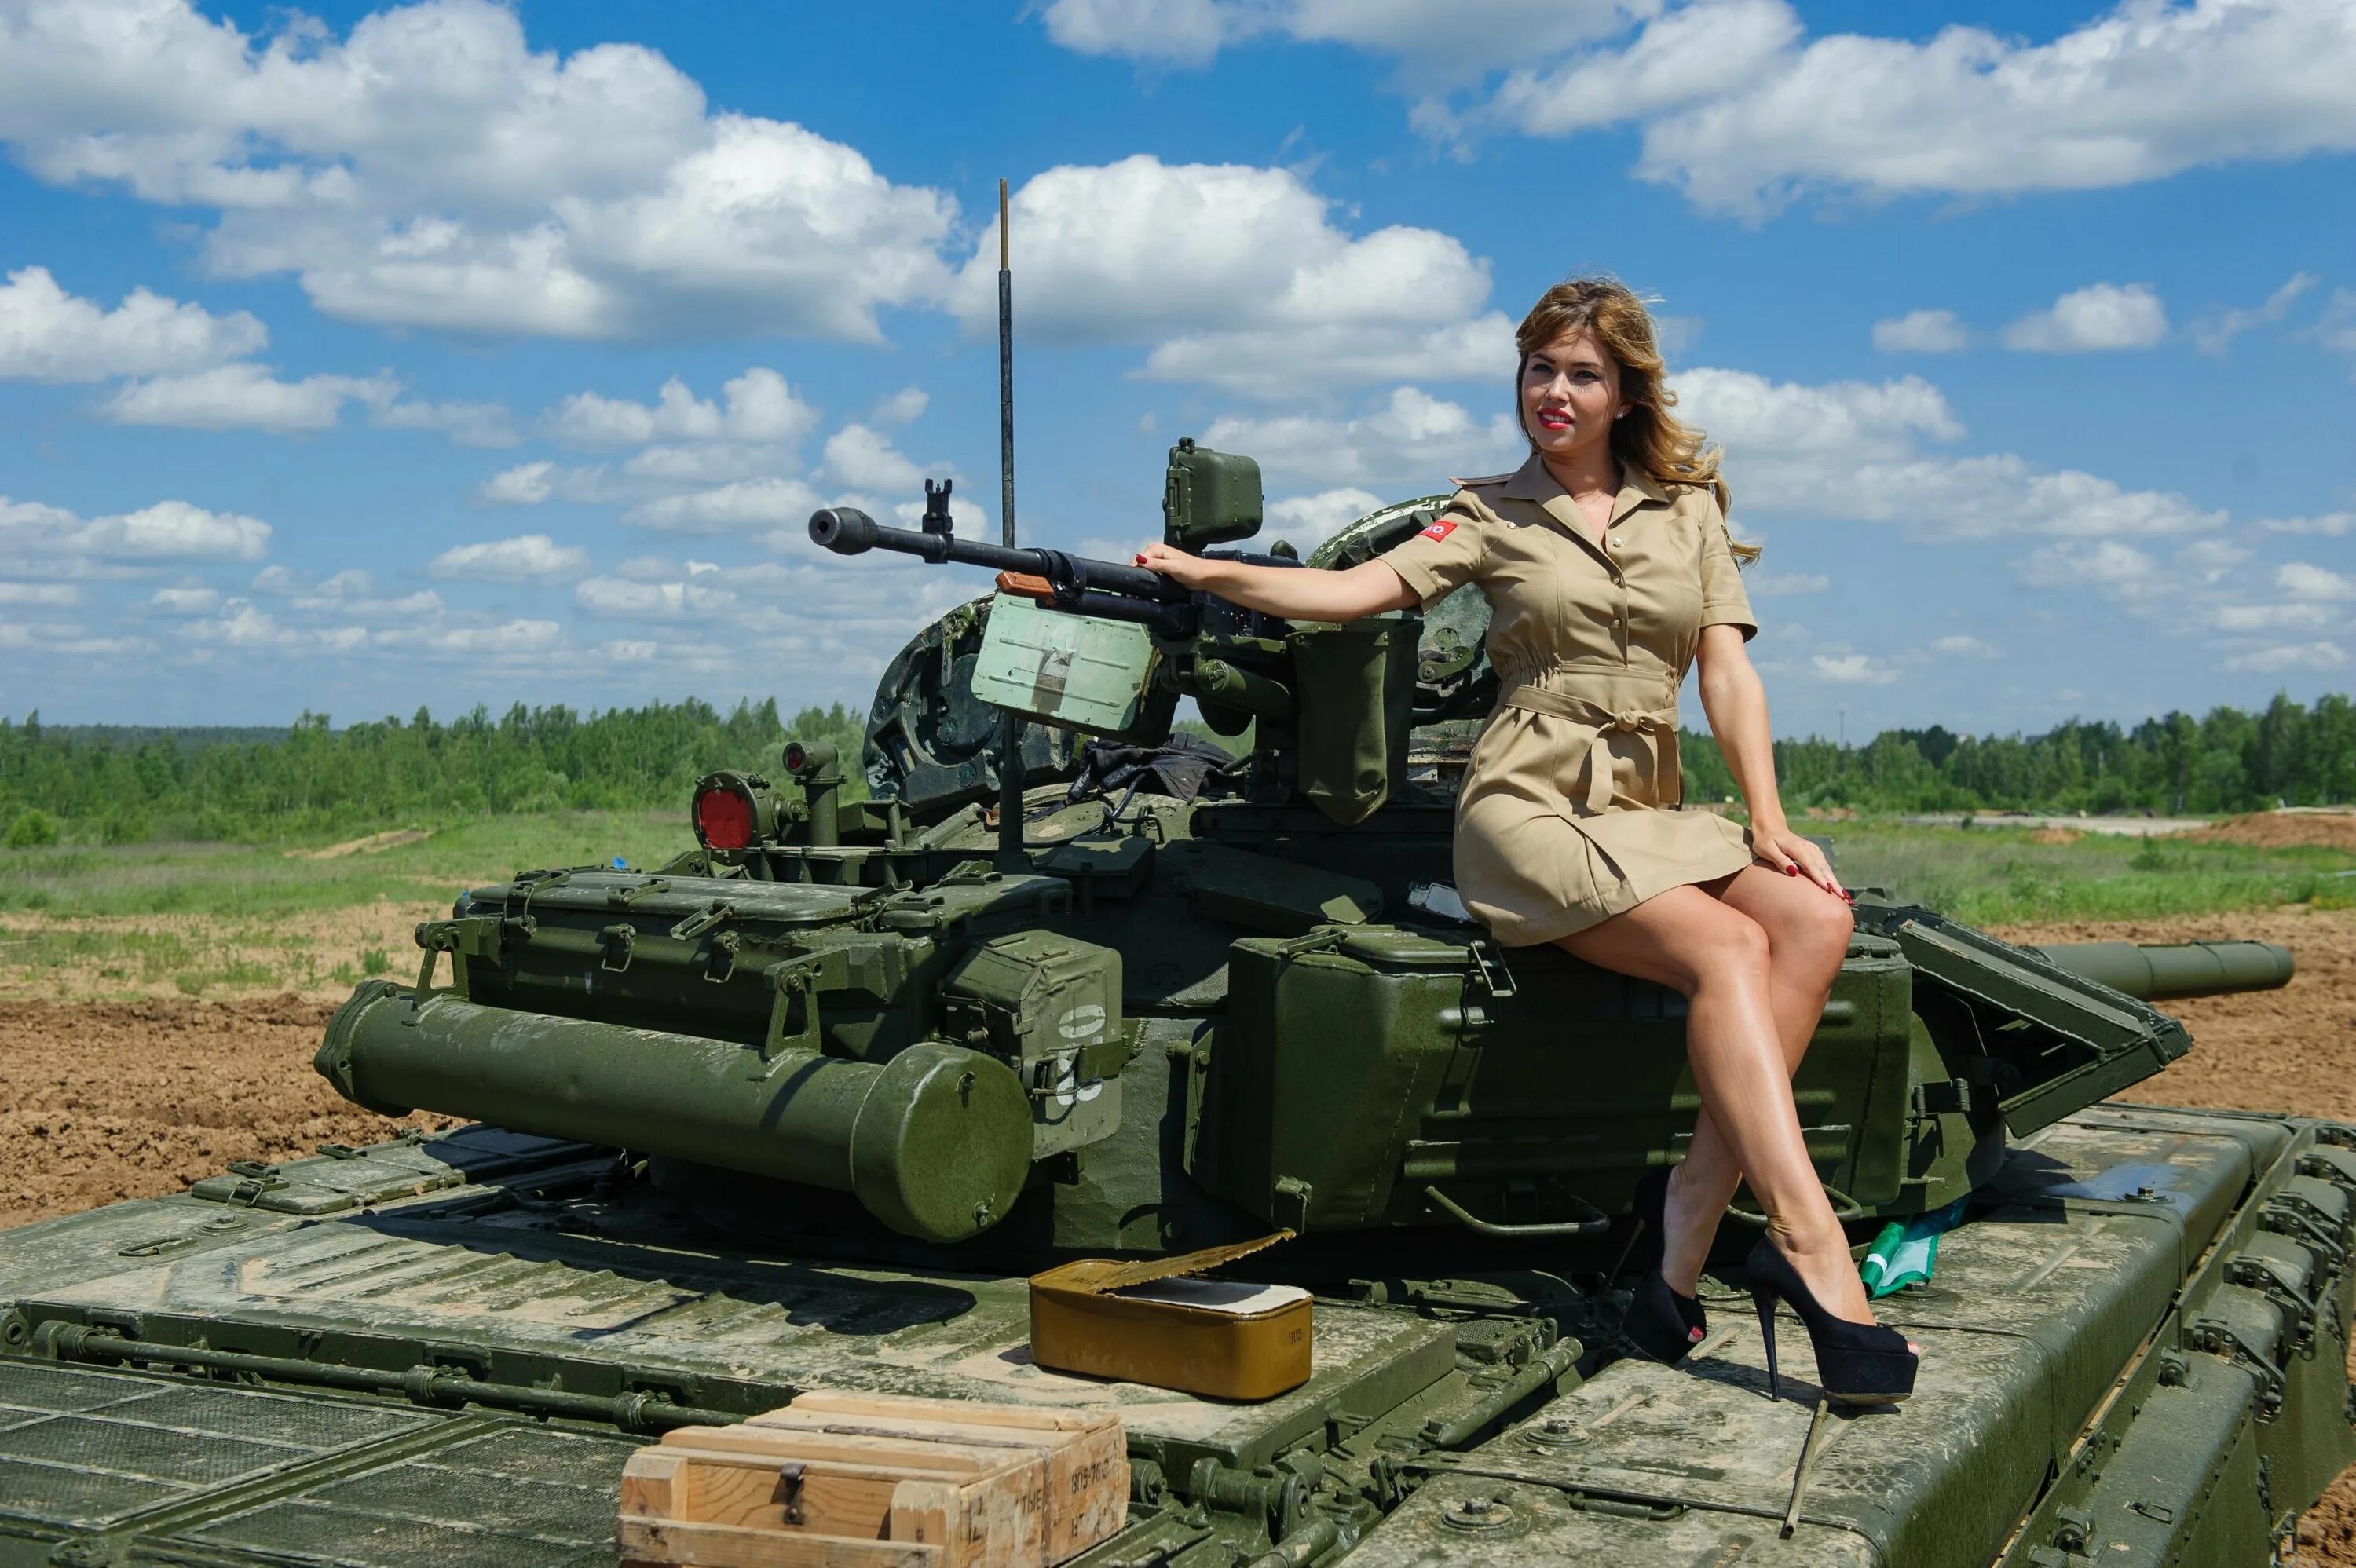 Какой т танкиста. Танковые войска девушки. Современный танкист. Девушка на танке. Русский современный танкист.